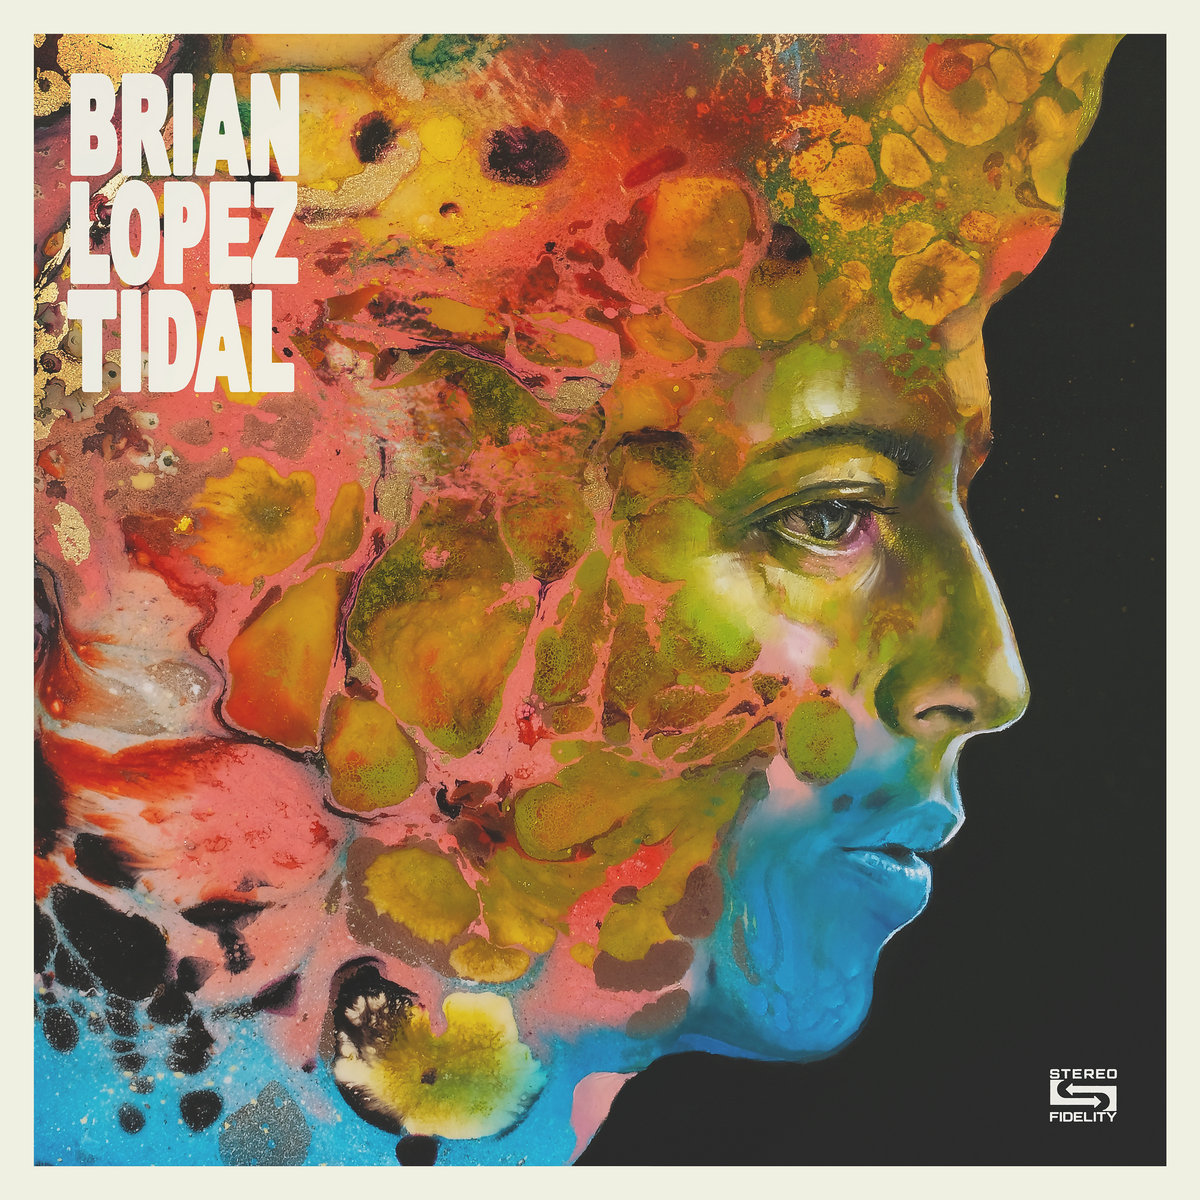 Brian Lopez ‘Tidal’ album artwork